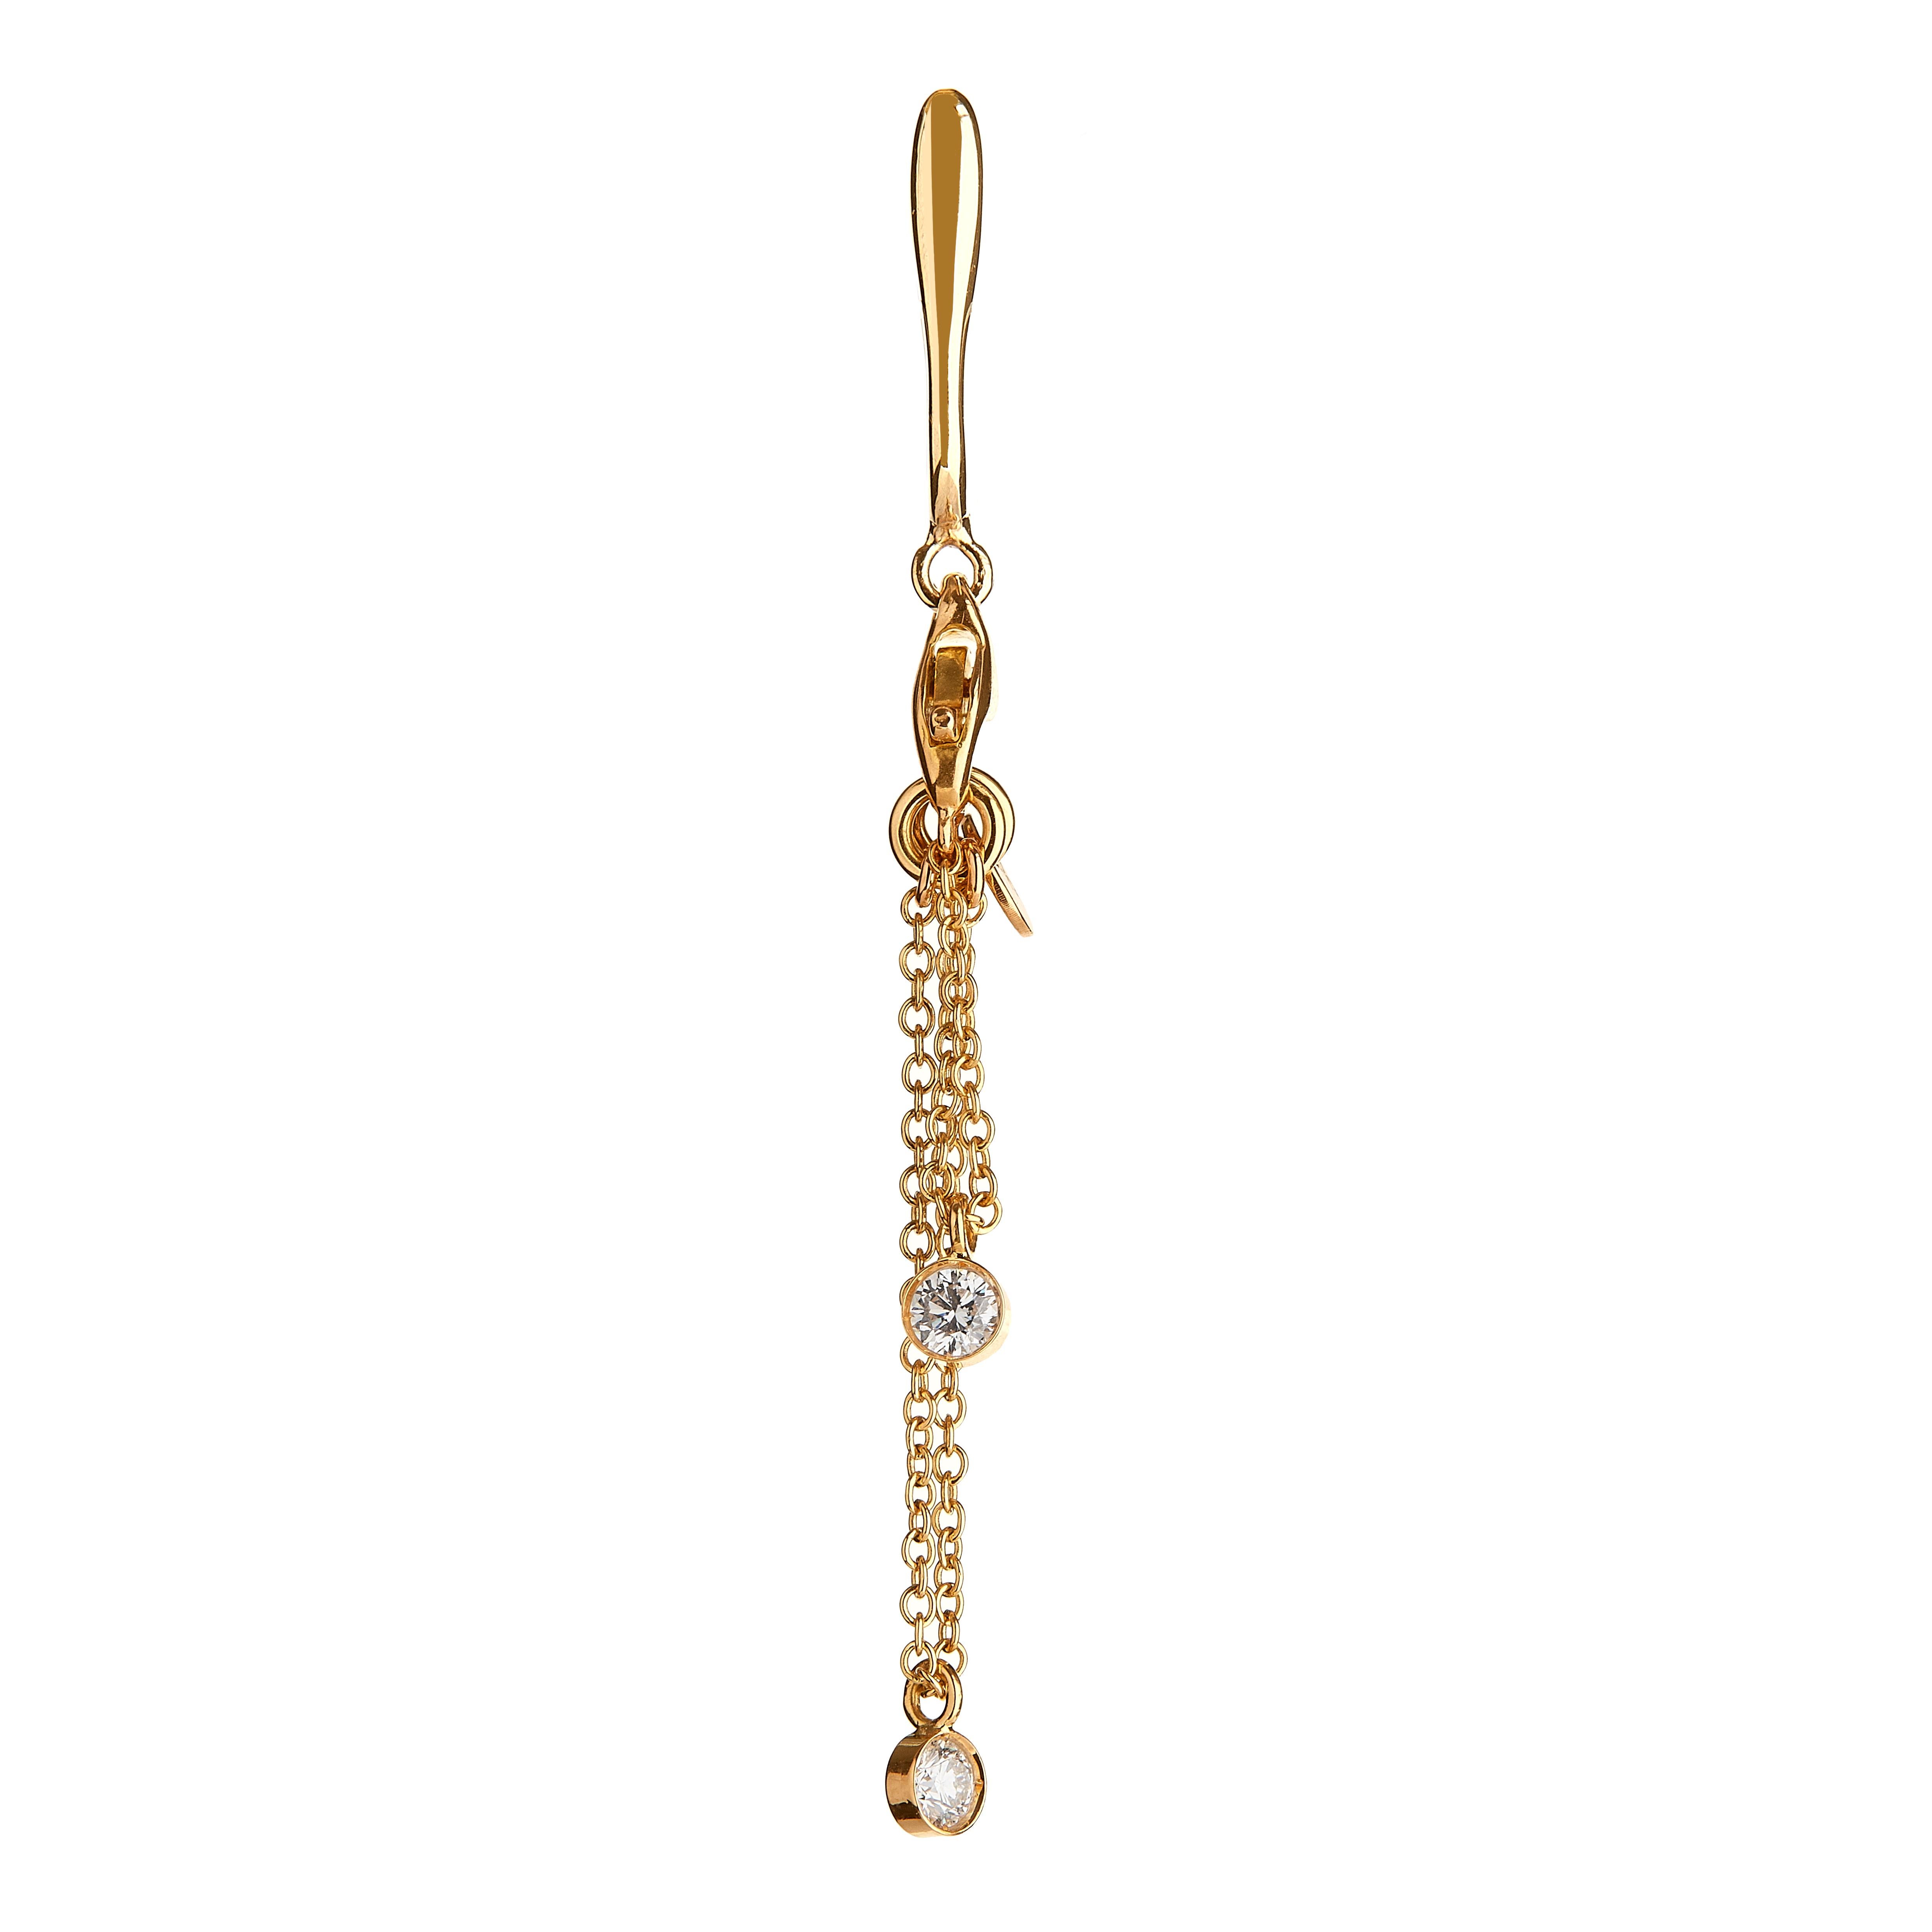 Nathalie Jean Contemporary 0.22 Carat Diamond Gold Pendant Drop Earring For Sale 3